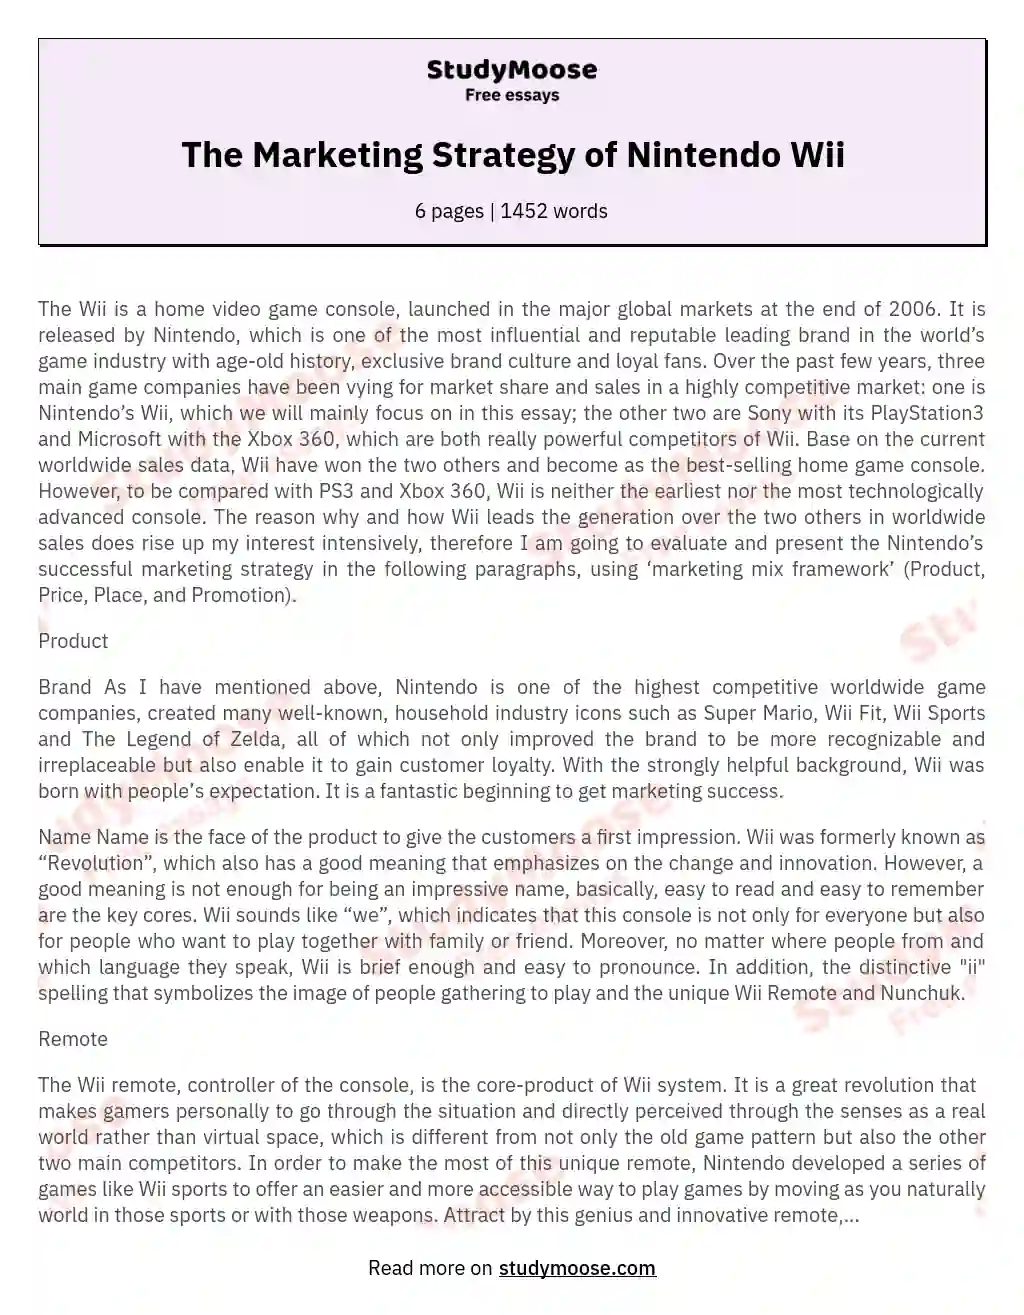 The Marketing Strategy of Nintendo Wii essay